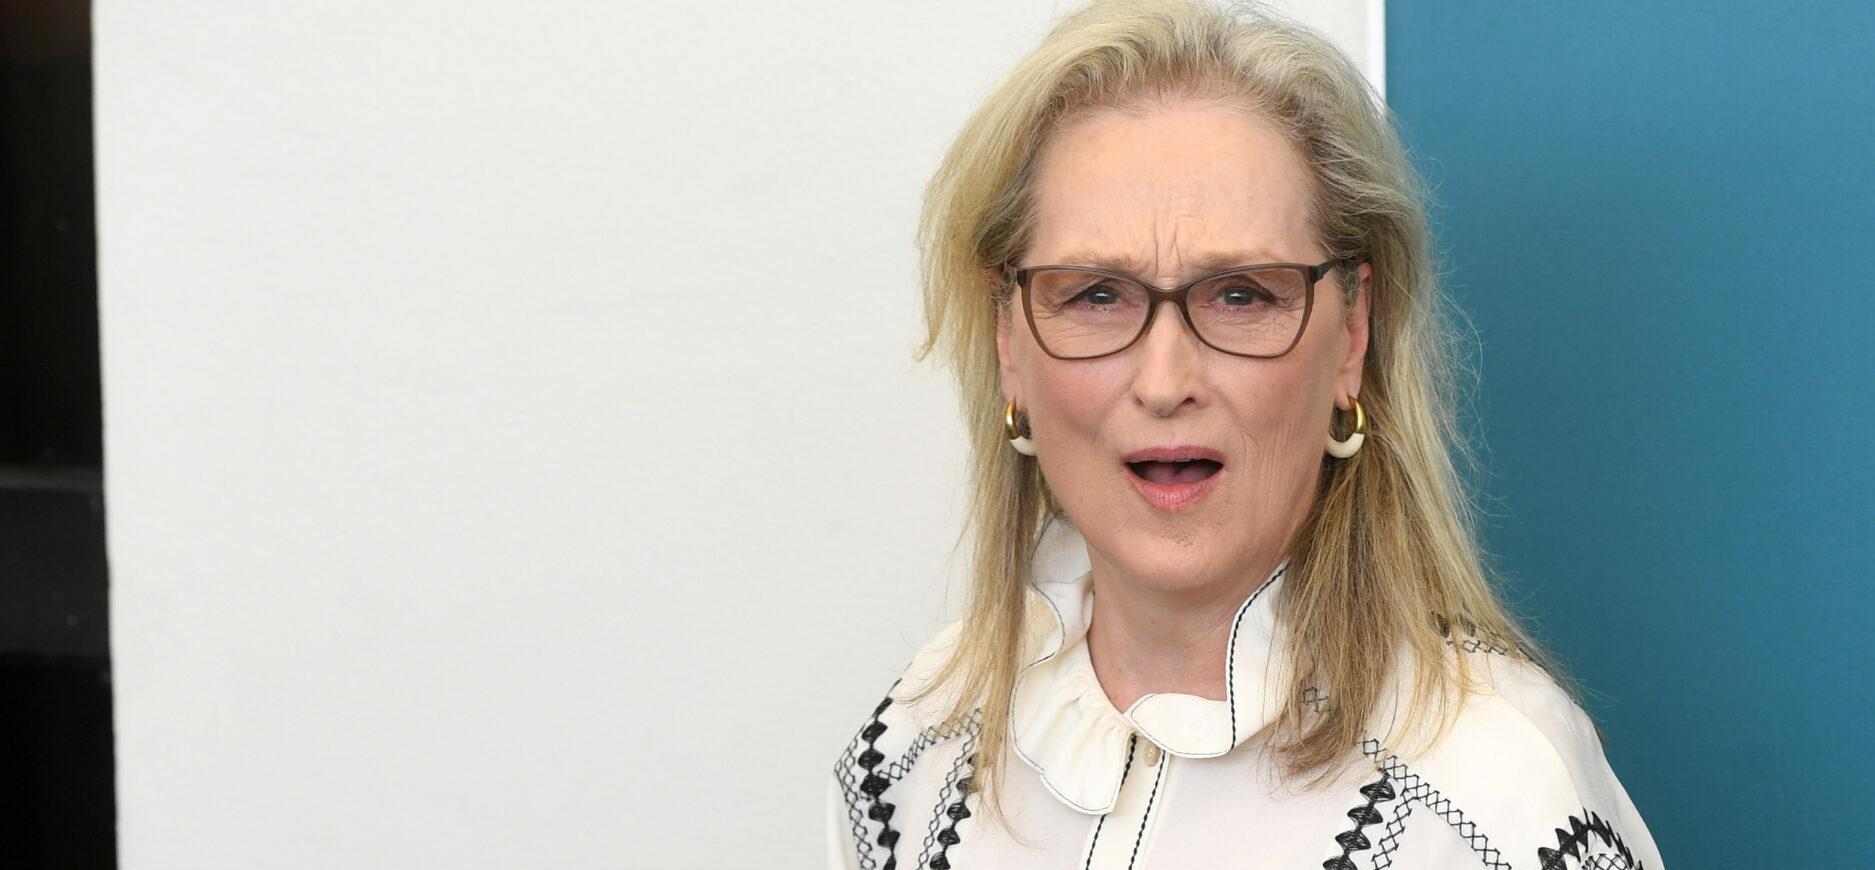 Meryl Streep acting shocked